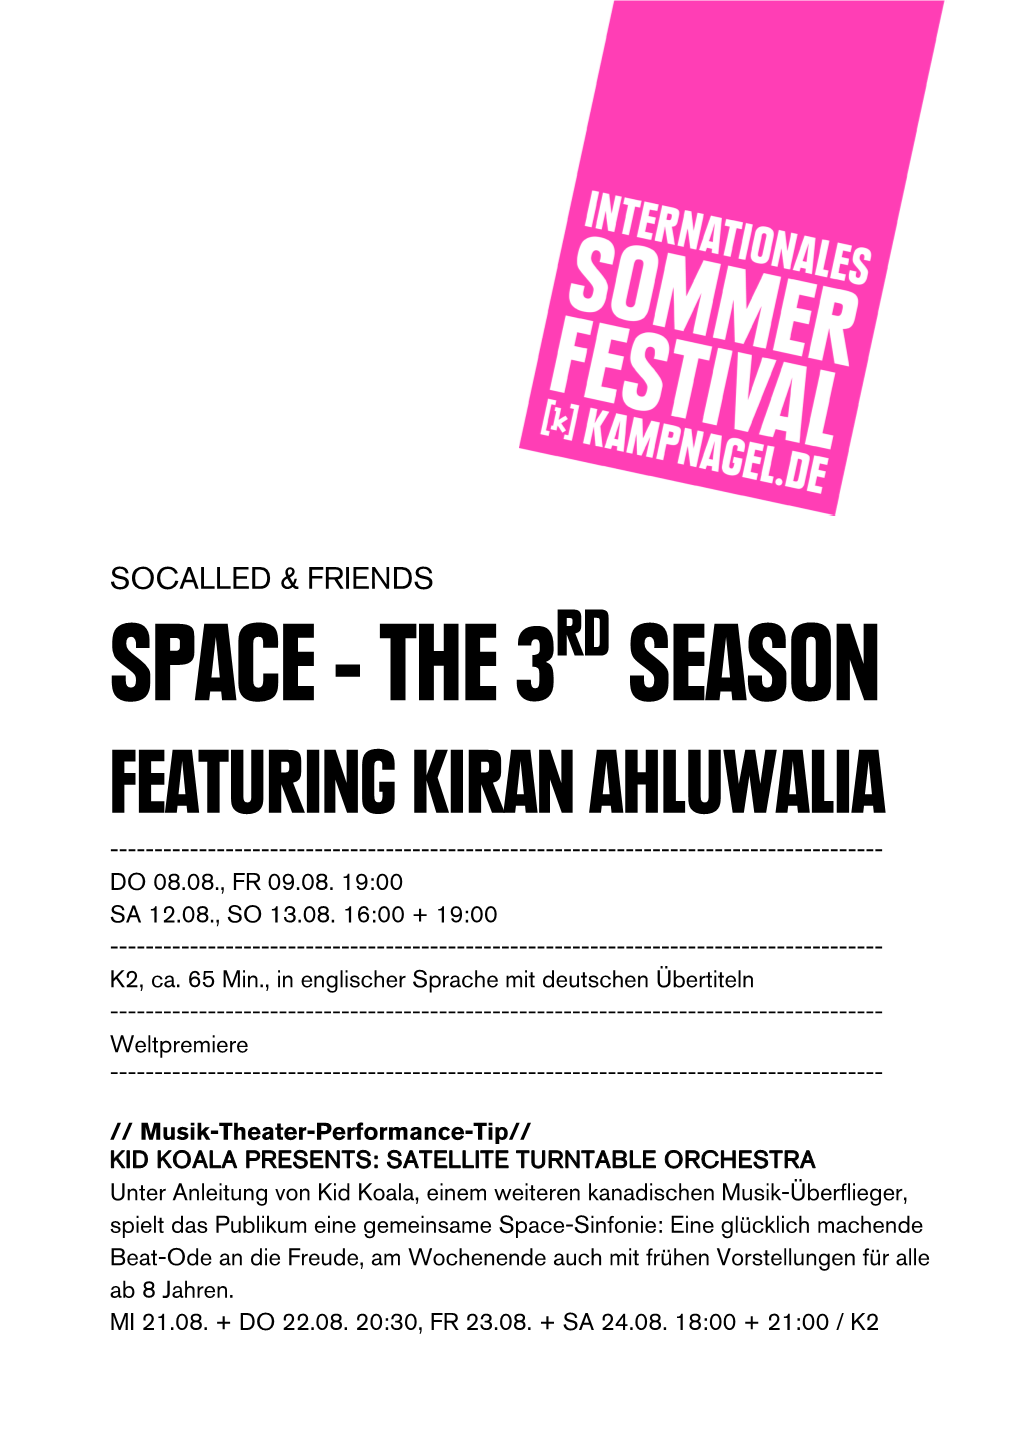 The 3Rd Season Featuring Kiran Ahluwalia ------Do 08.08., Fr 09.08